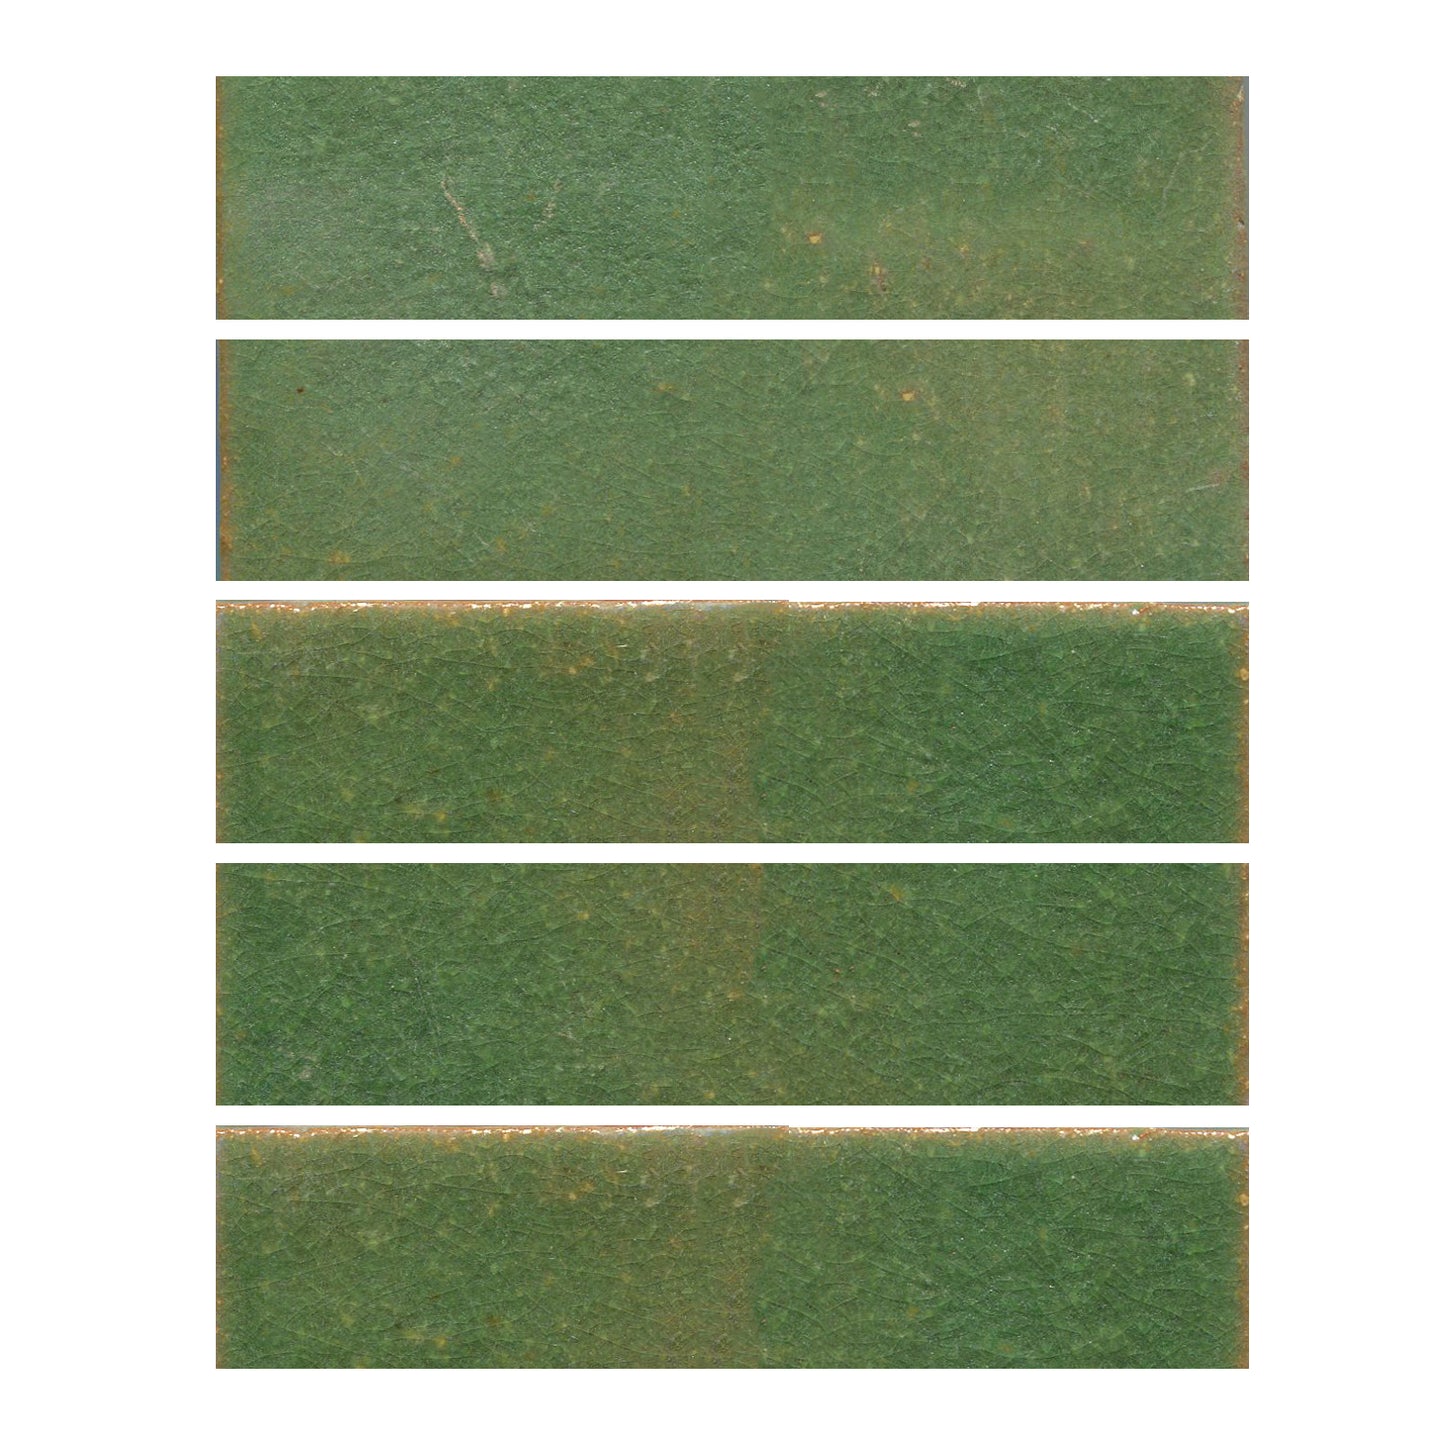 Avocado green 1.5x6 field tile